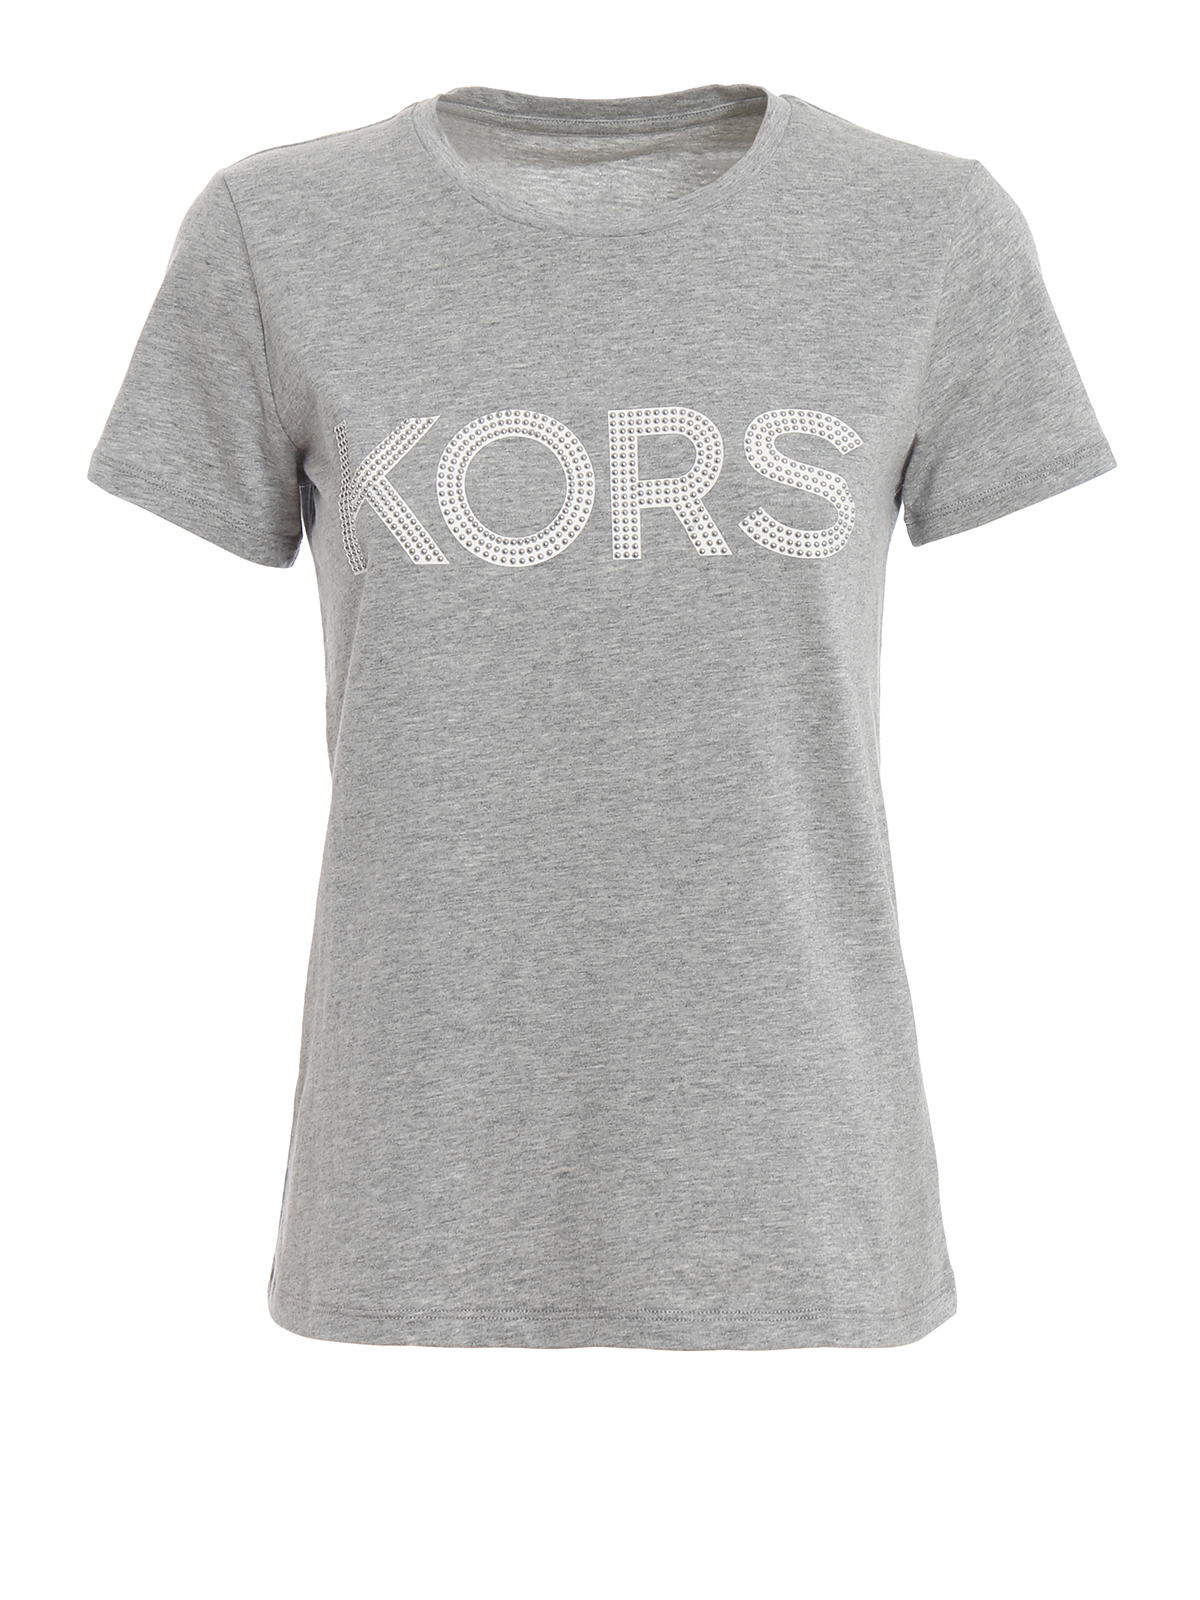 T-shirts Michael Kors - Studded Kors logo grey cotton T-shirt ...